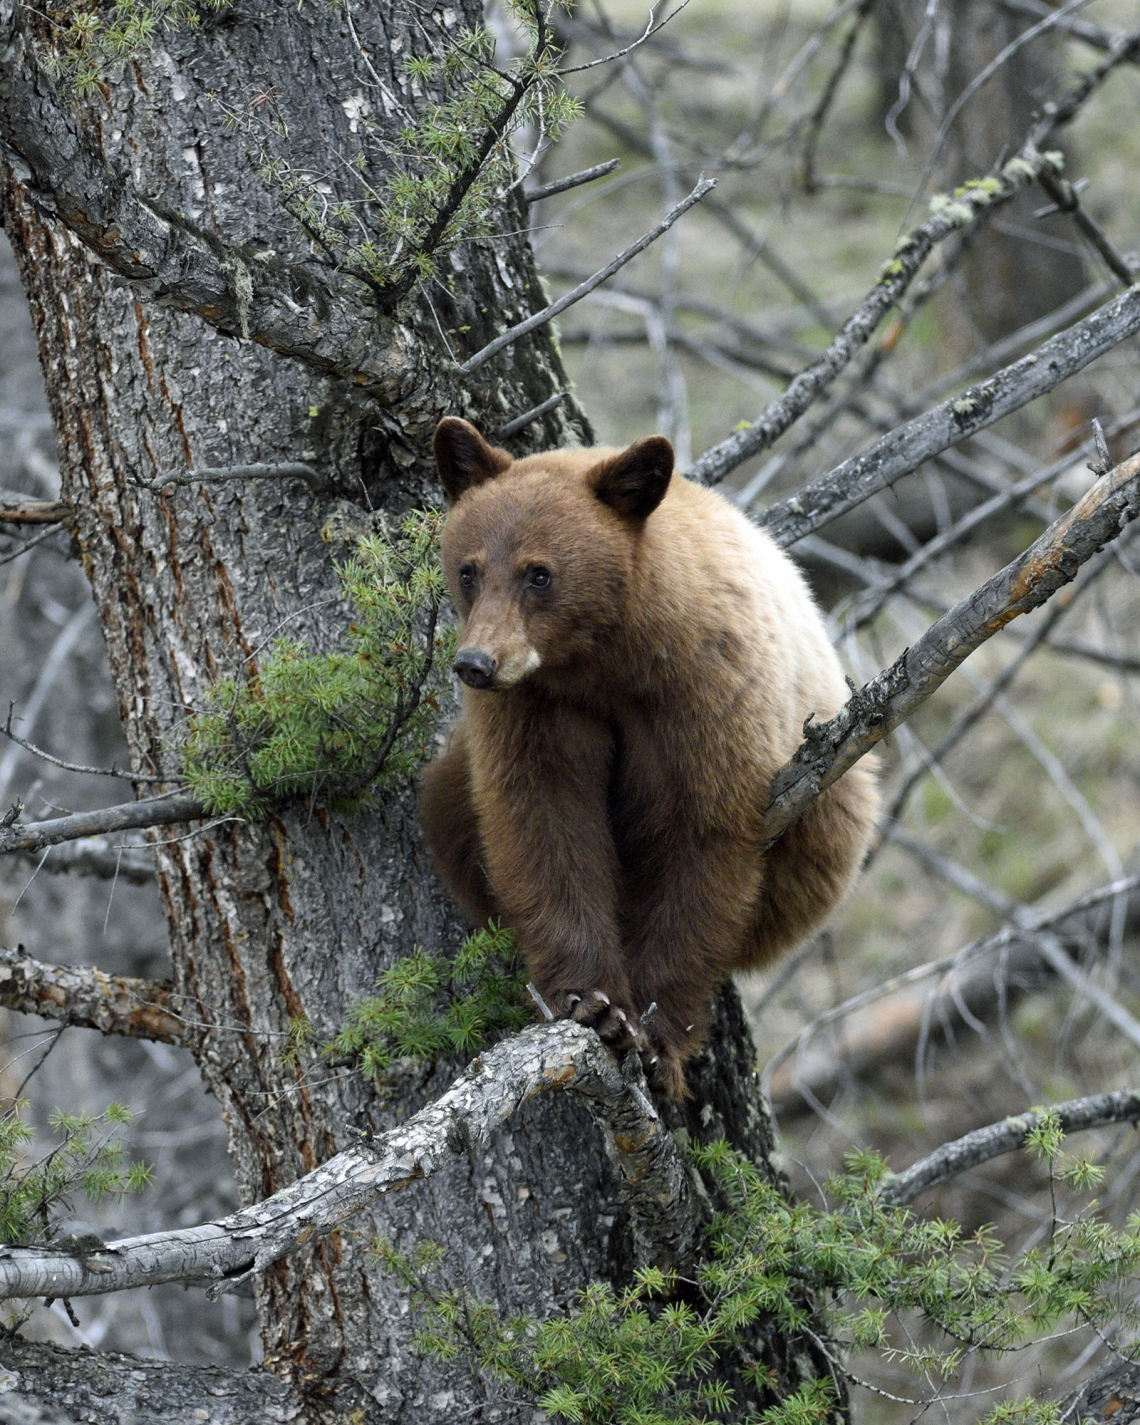 American black bear_U americanus Yosemite National Park California_blonde color phase_T Sharp